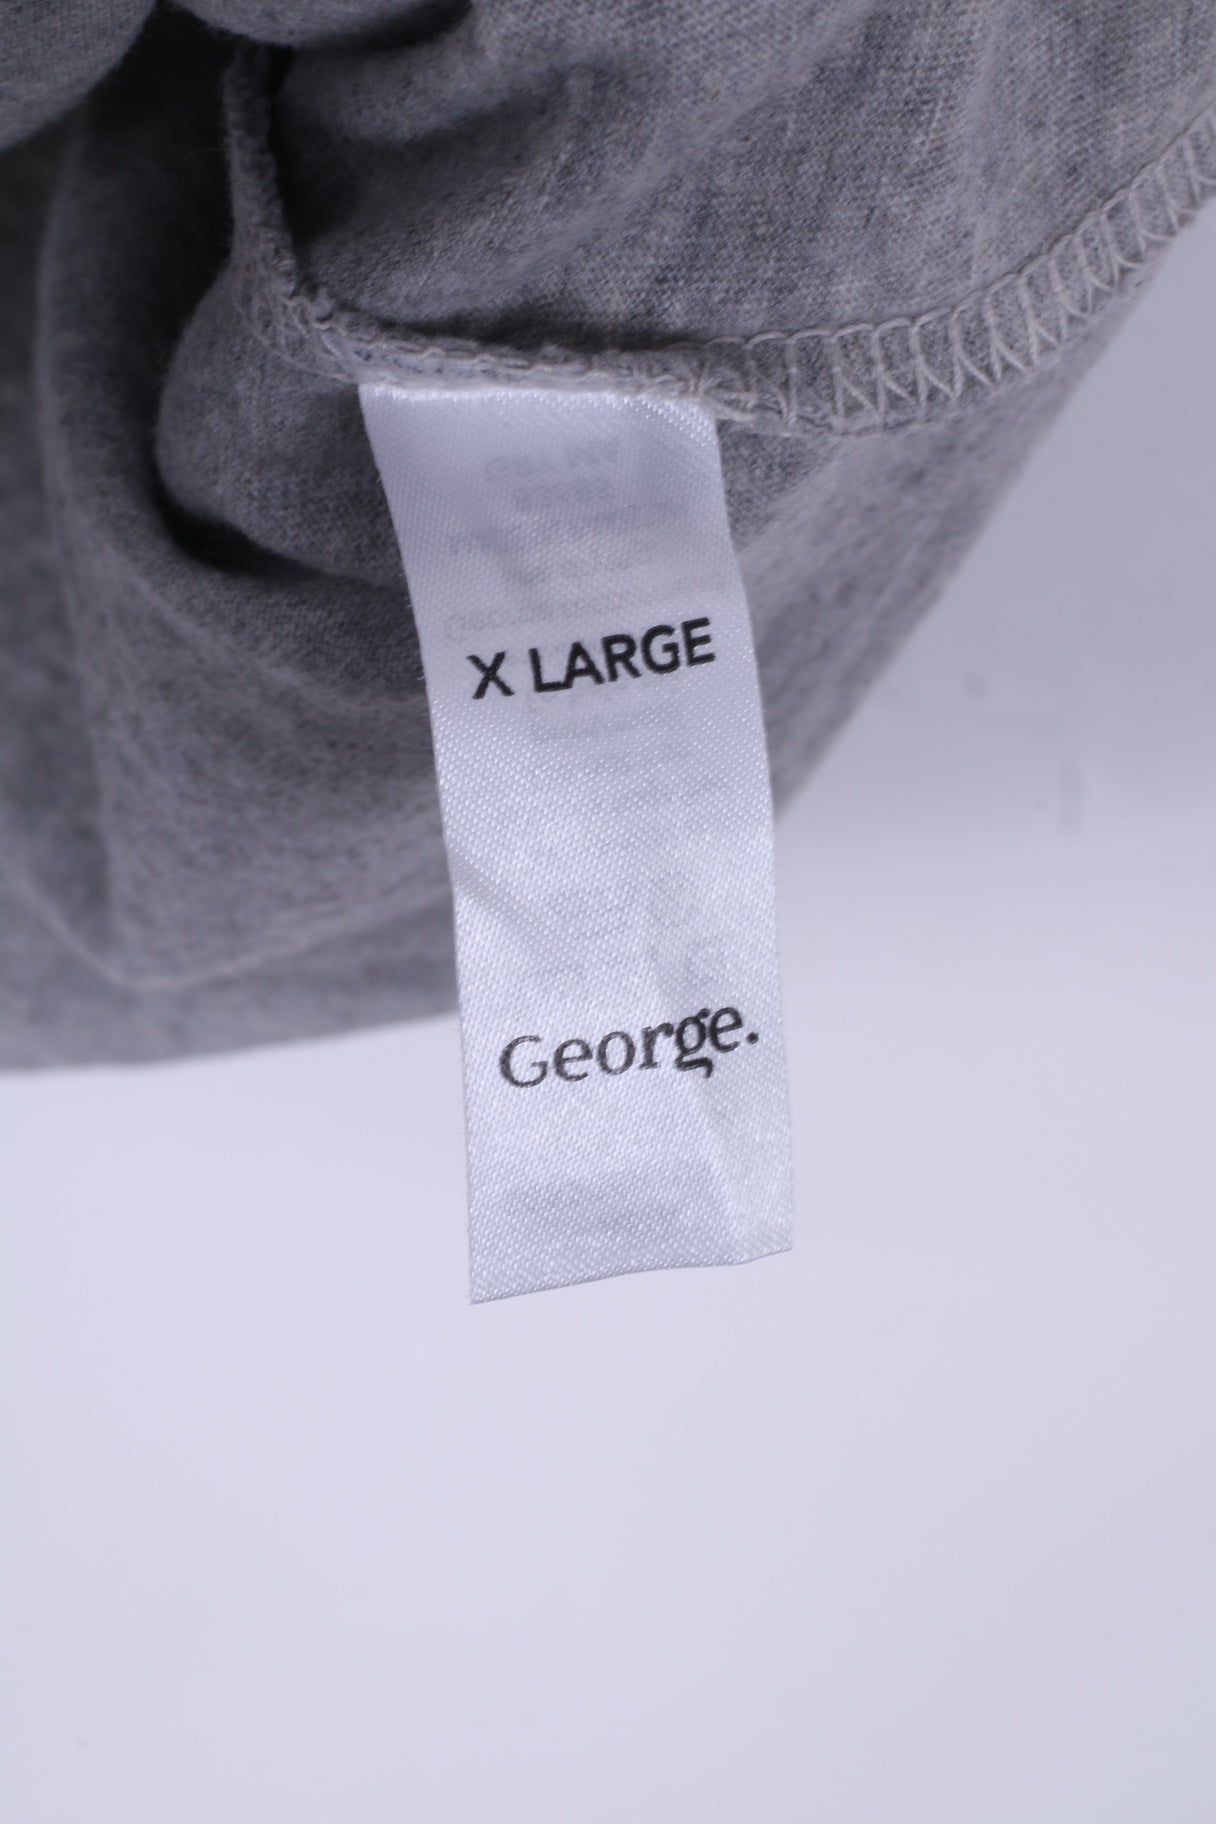 George Coca-Cola Womens 20 XL T-Shirt Grey Sprite Graphic